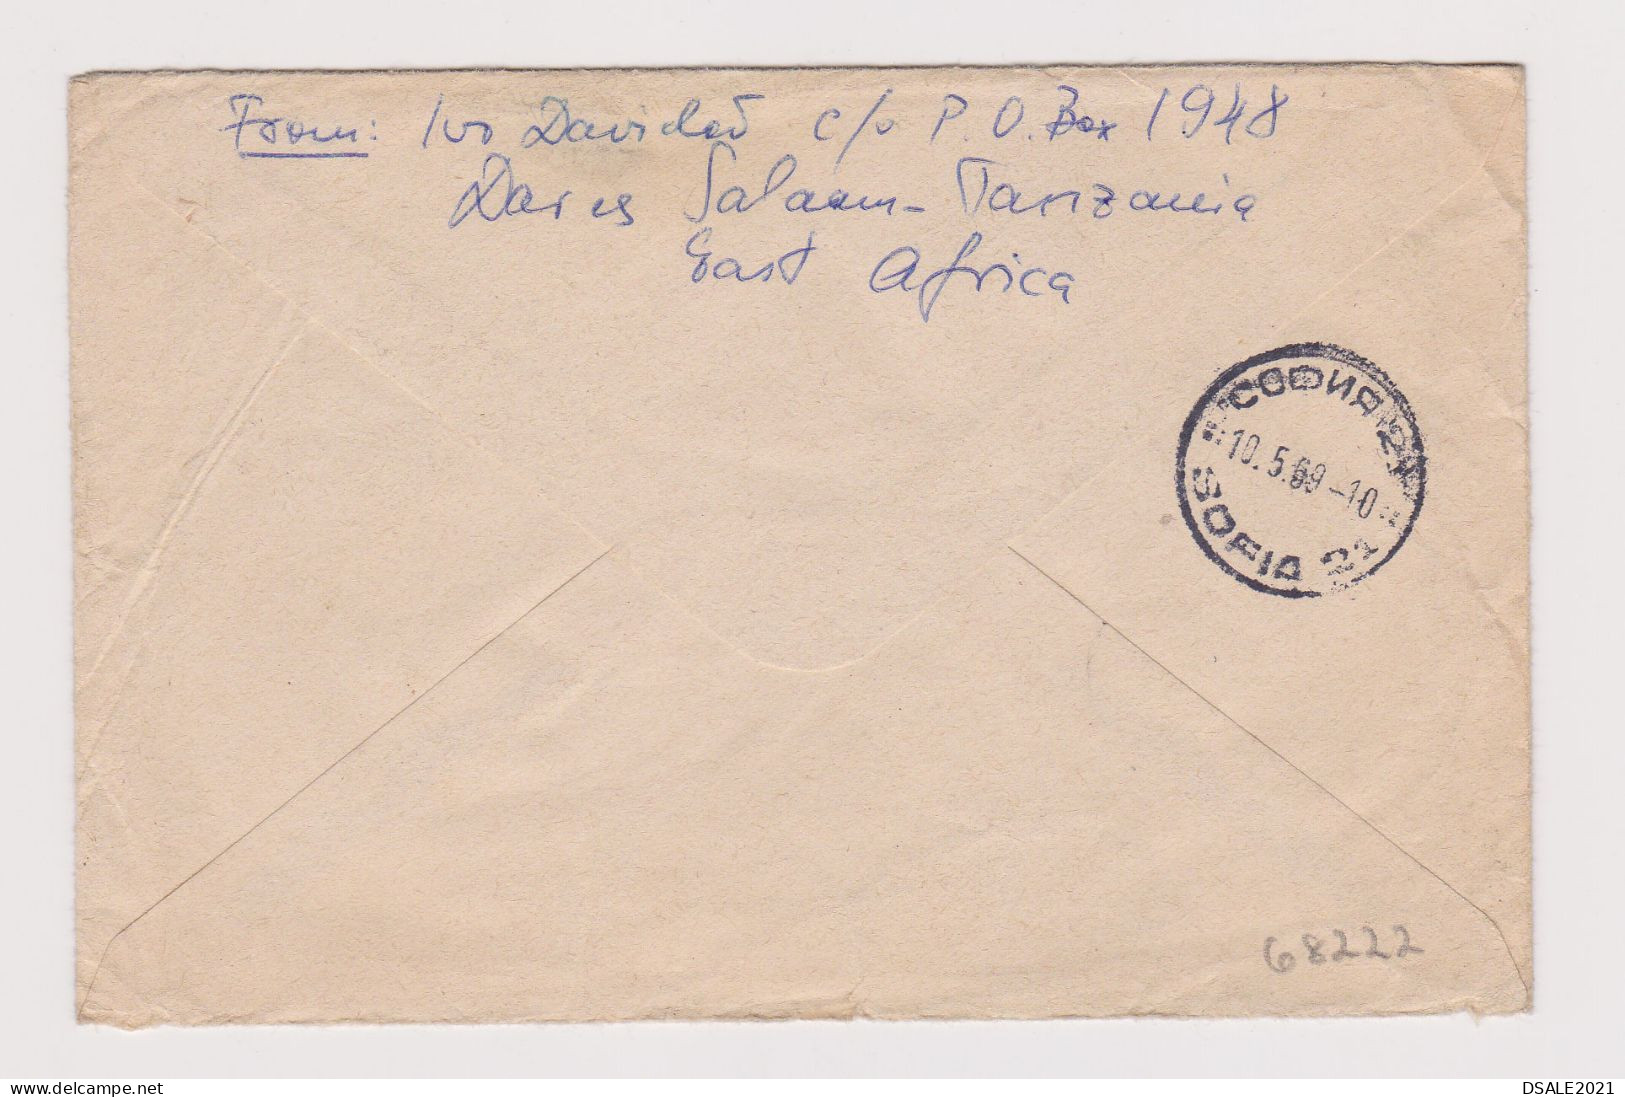 Uganda Kenya Tanzania 1969 Airmail Cover W/Topic Stamps, 50c+2'50 Labour-ILO New Fee Ovp., Sent To Bulgaria (68222) - Kenya, Uganda & Tanzania